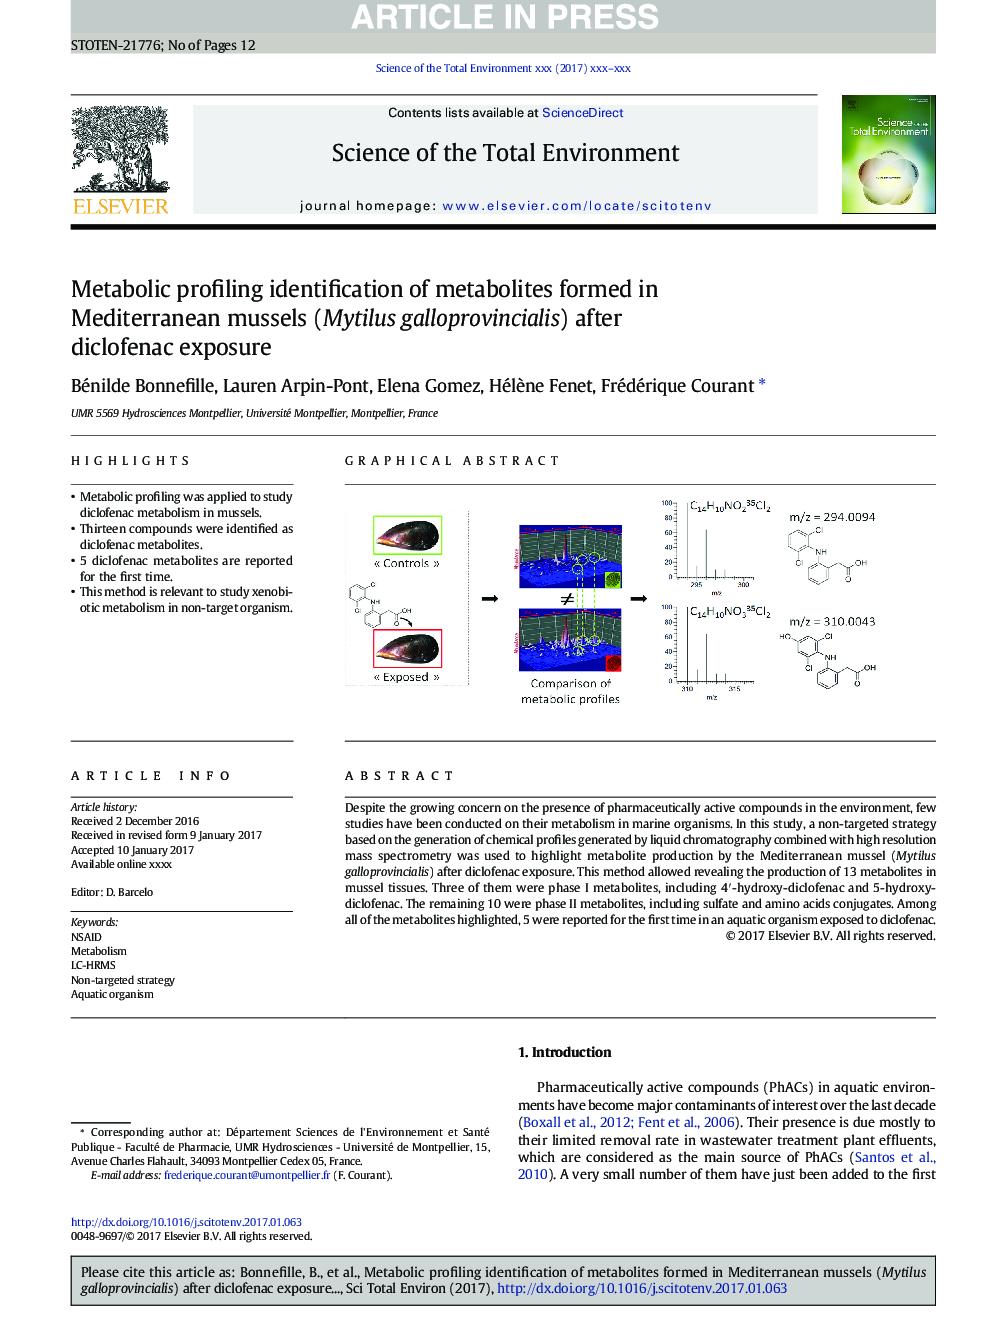 Metabolic profiling identification of metabolites formed in Mediterranean mussels (Mytilus galloprovincialis) after diclofenac exposure